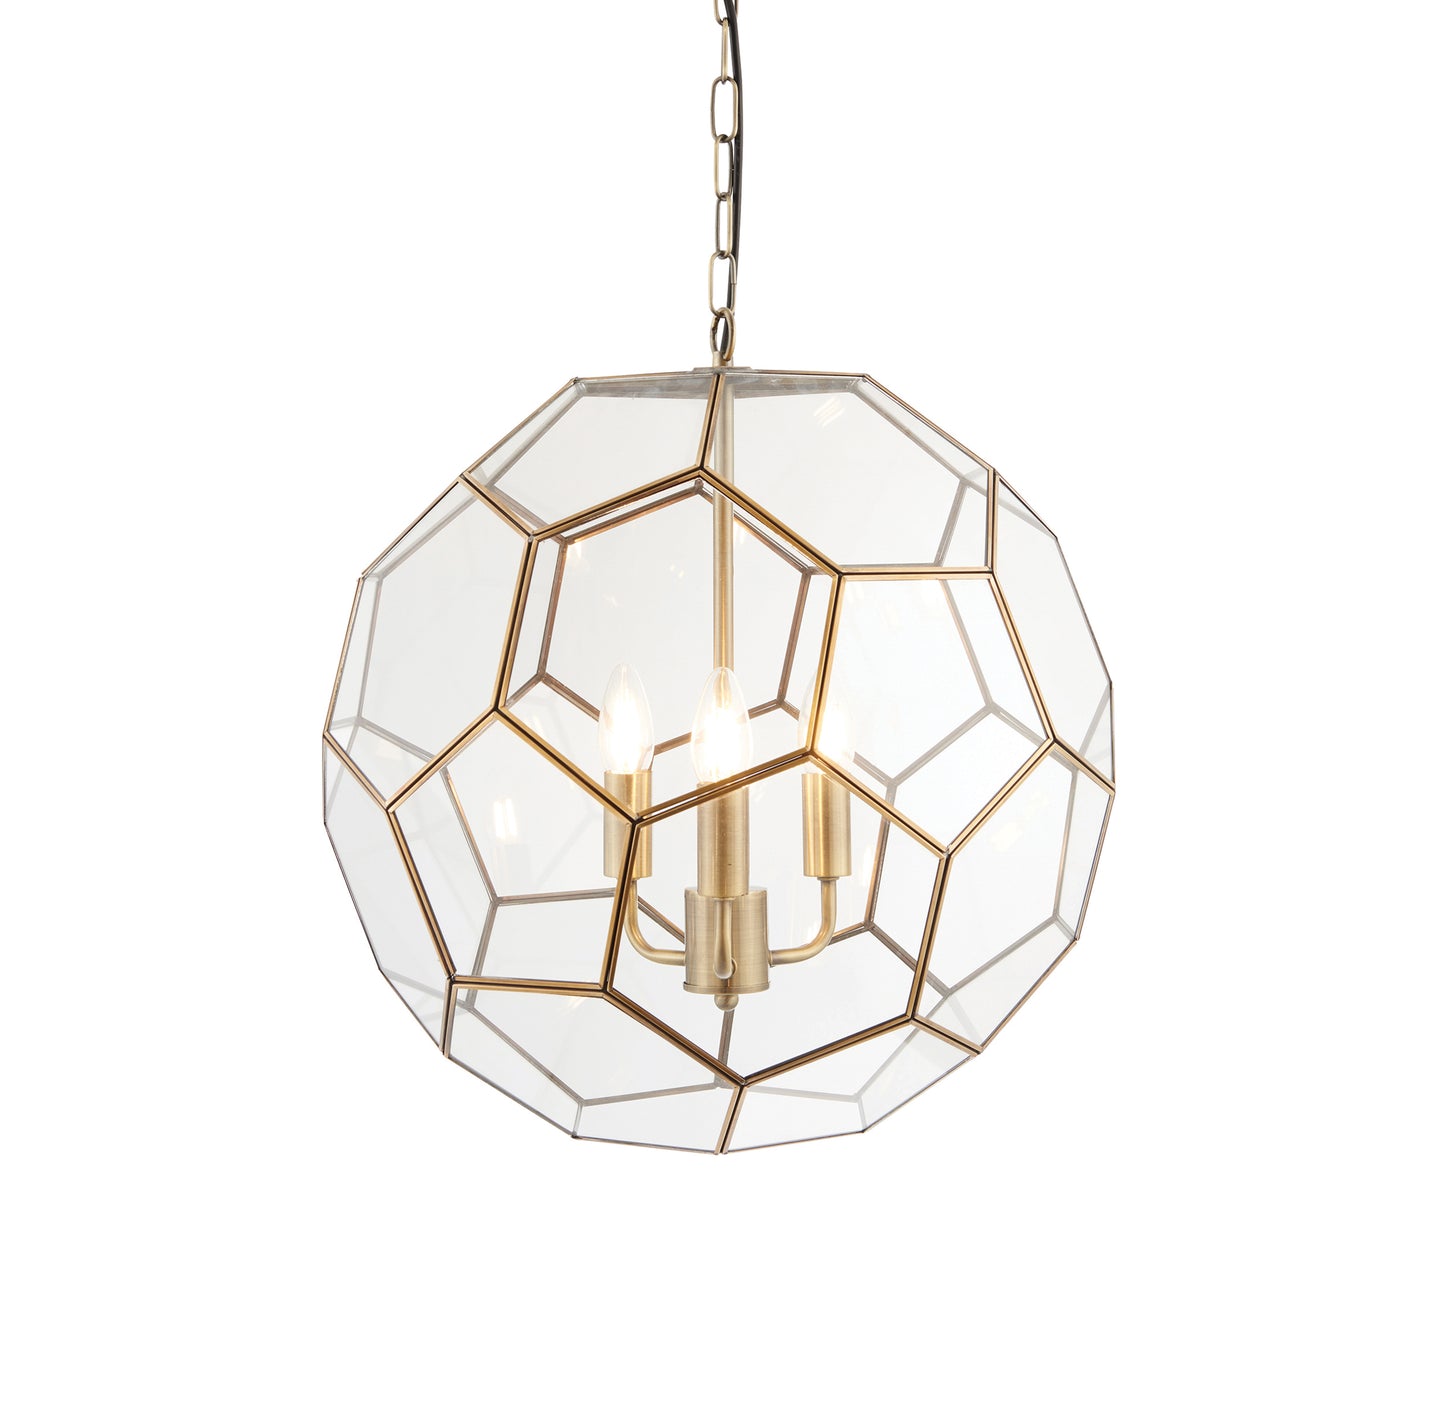 A Miele 3 Pendant Light Antique Brass and glass sphere pendant light for interior decor.